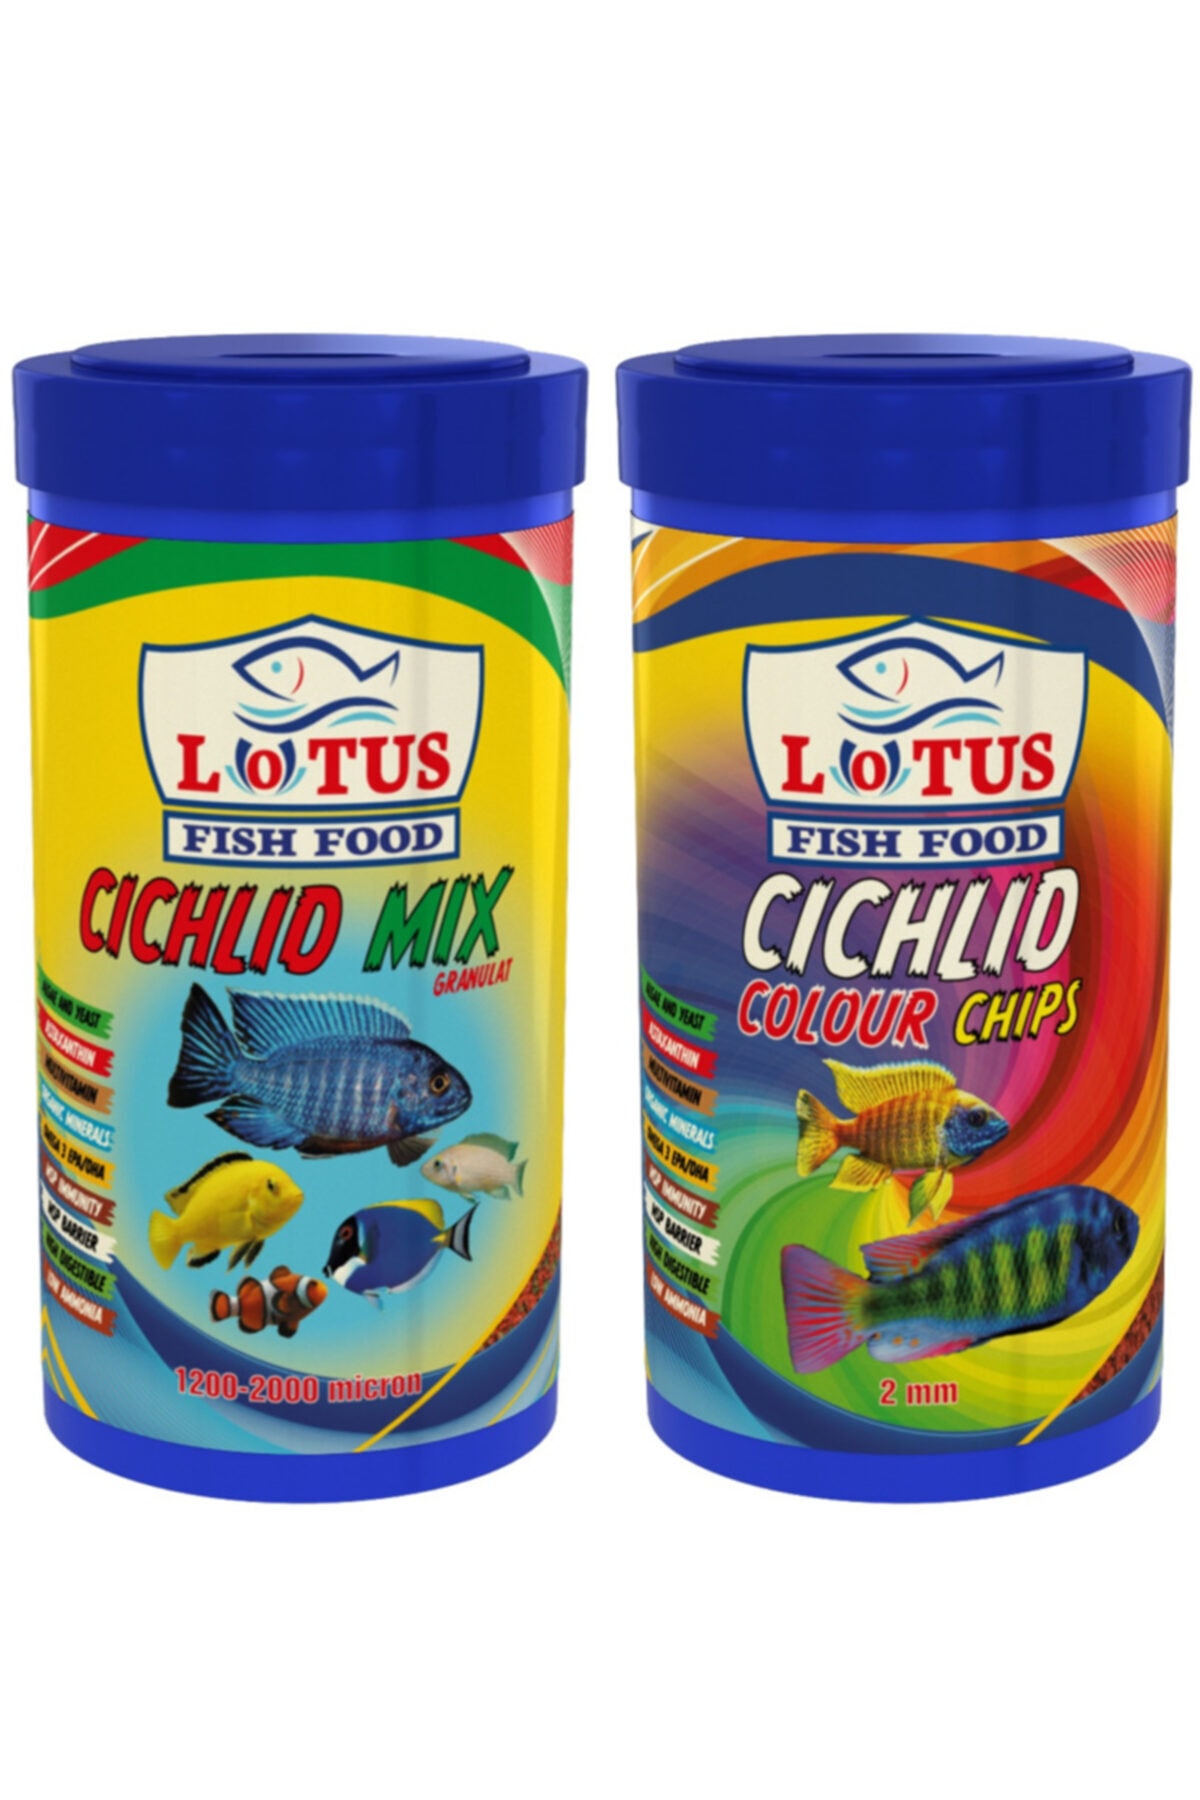 Lotus Cichlid Mix 250 Ml Ve Cichlid Colour Chips 250 Ml Balık Yemi